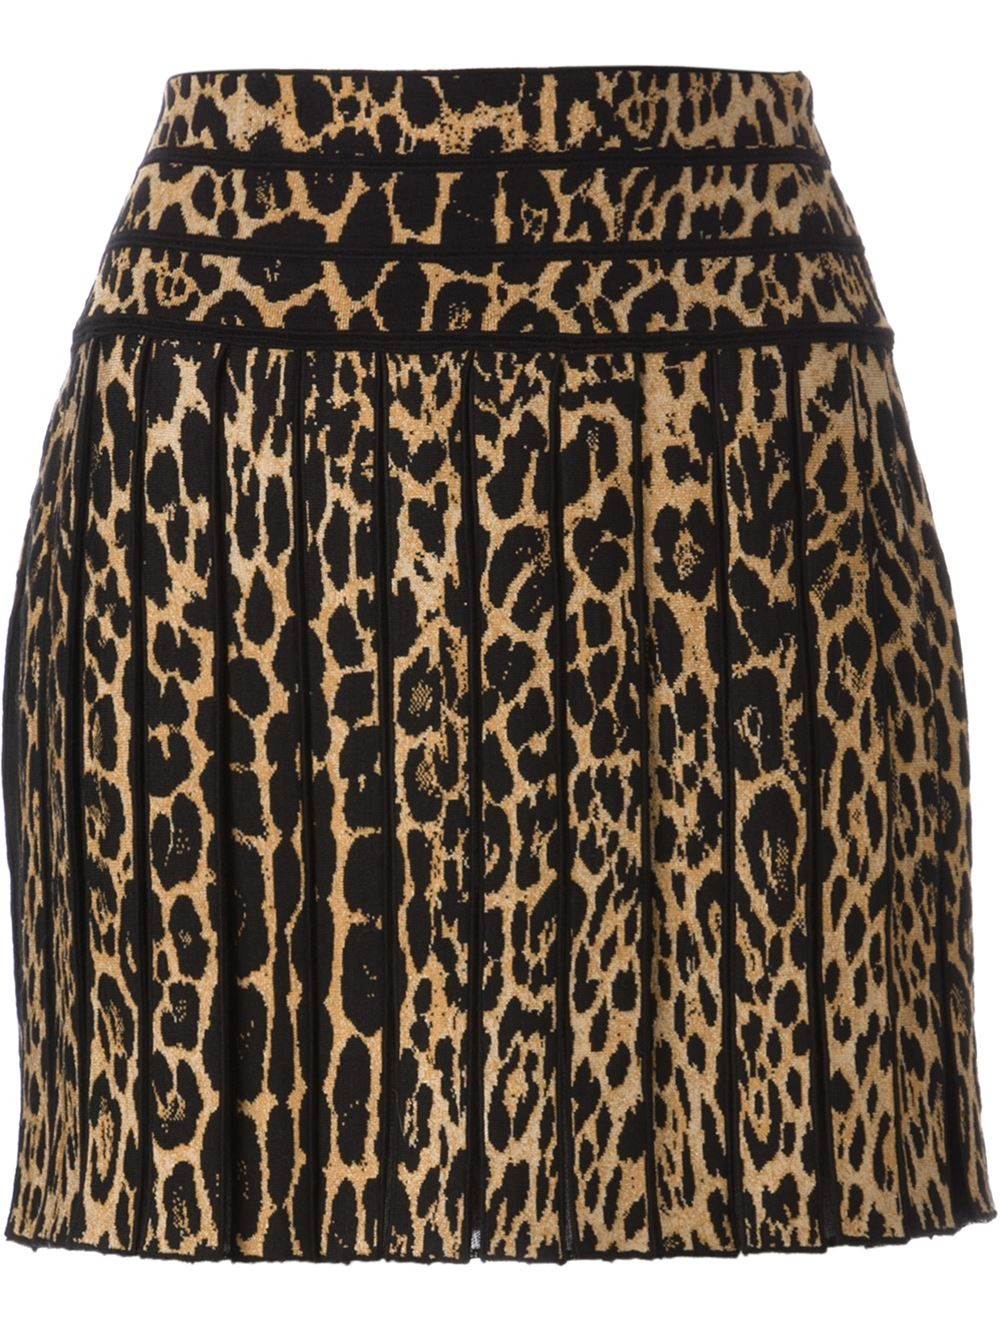 Roberto cavalli Leopard Print Pleated Skirt in Black | Lyst